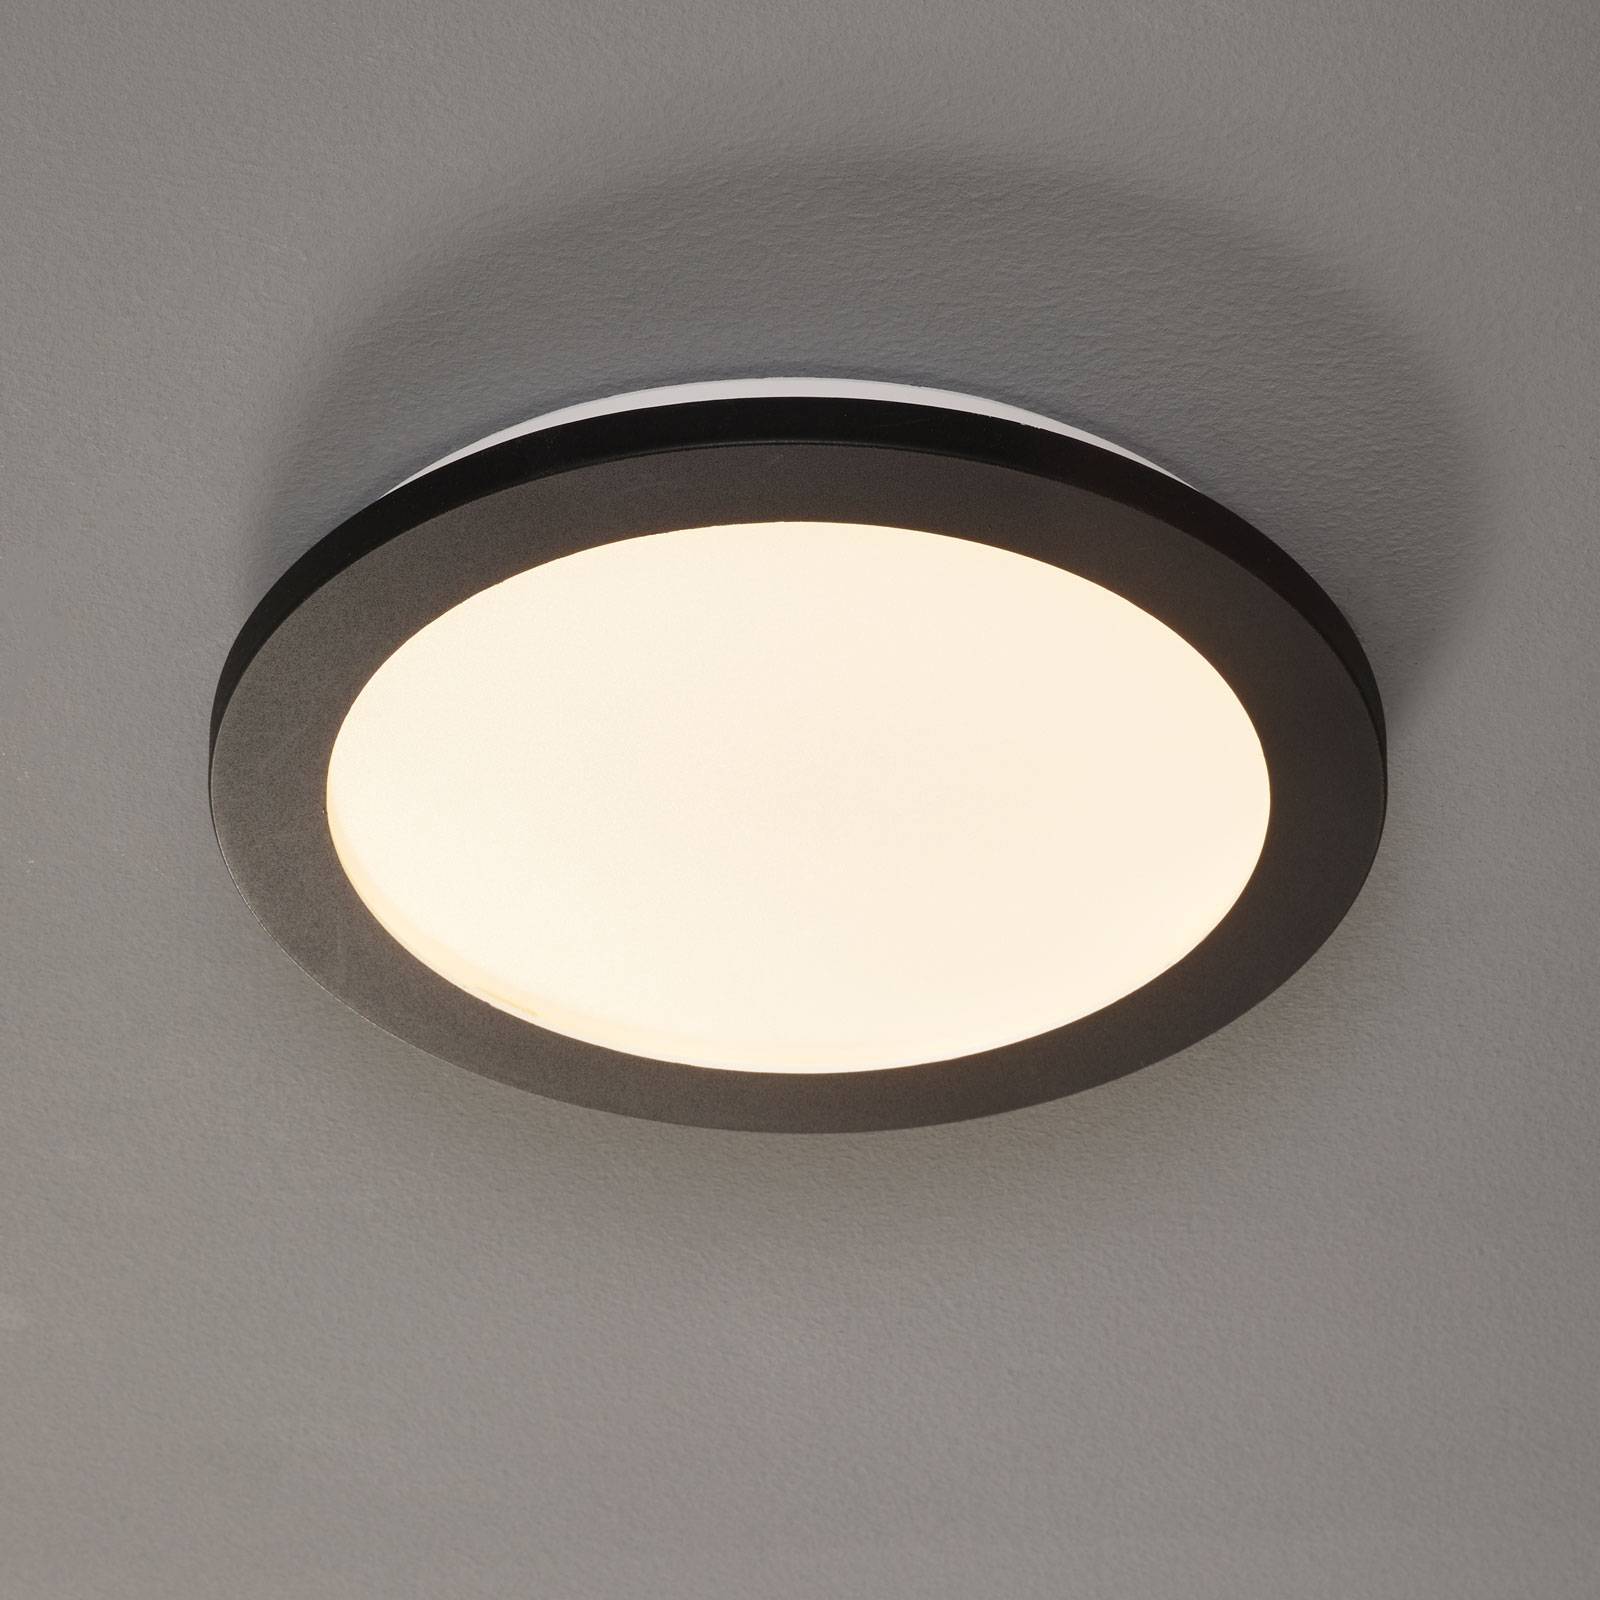 Lampa sufitowa LED Camillus, okrągła, Ø 26 cm